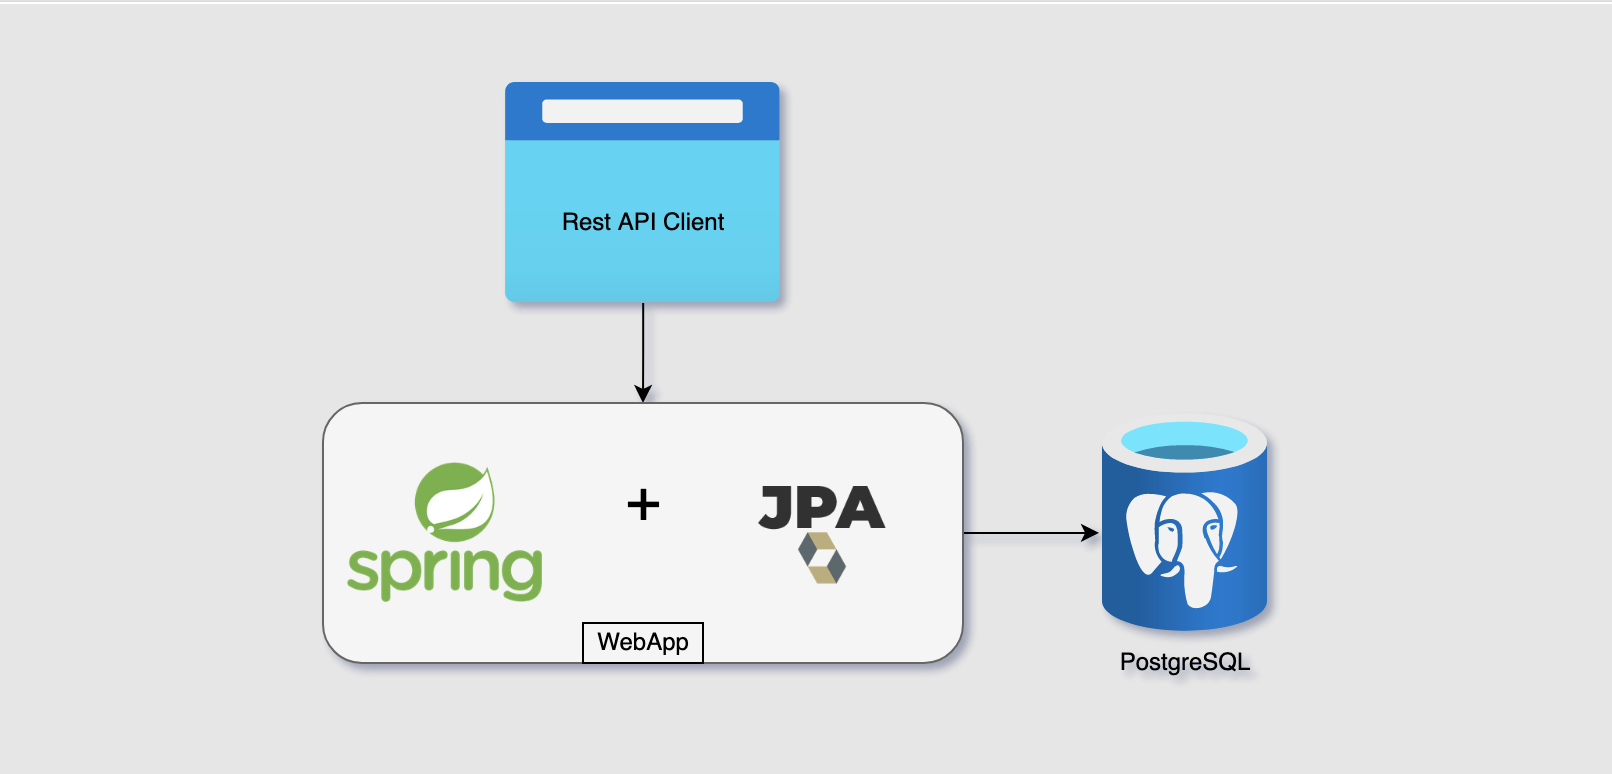 SpringBoot app with PostgreSQL database using JPA.